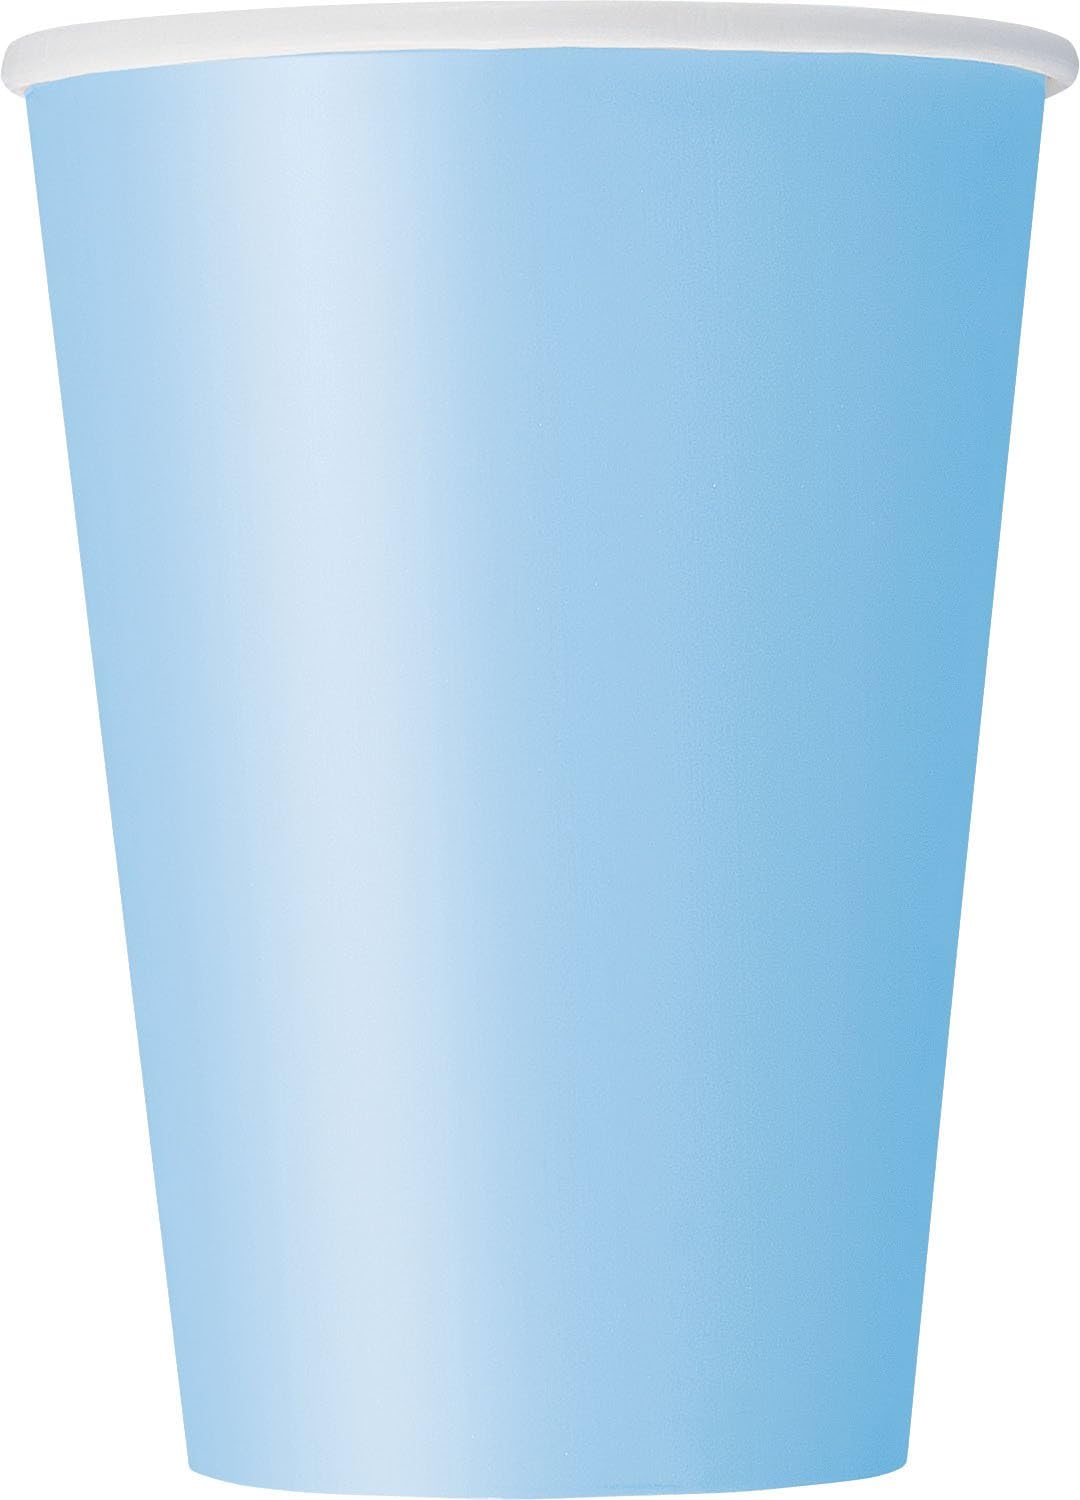 10pcs 12oz Cups (Powder Blue)